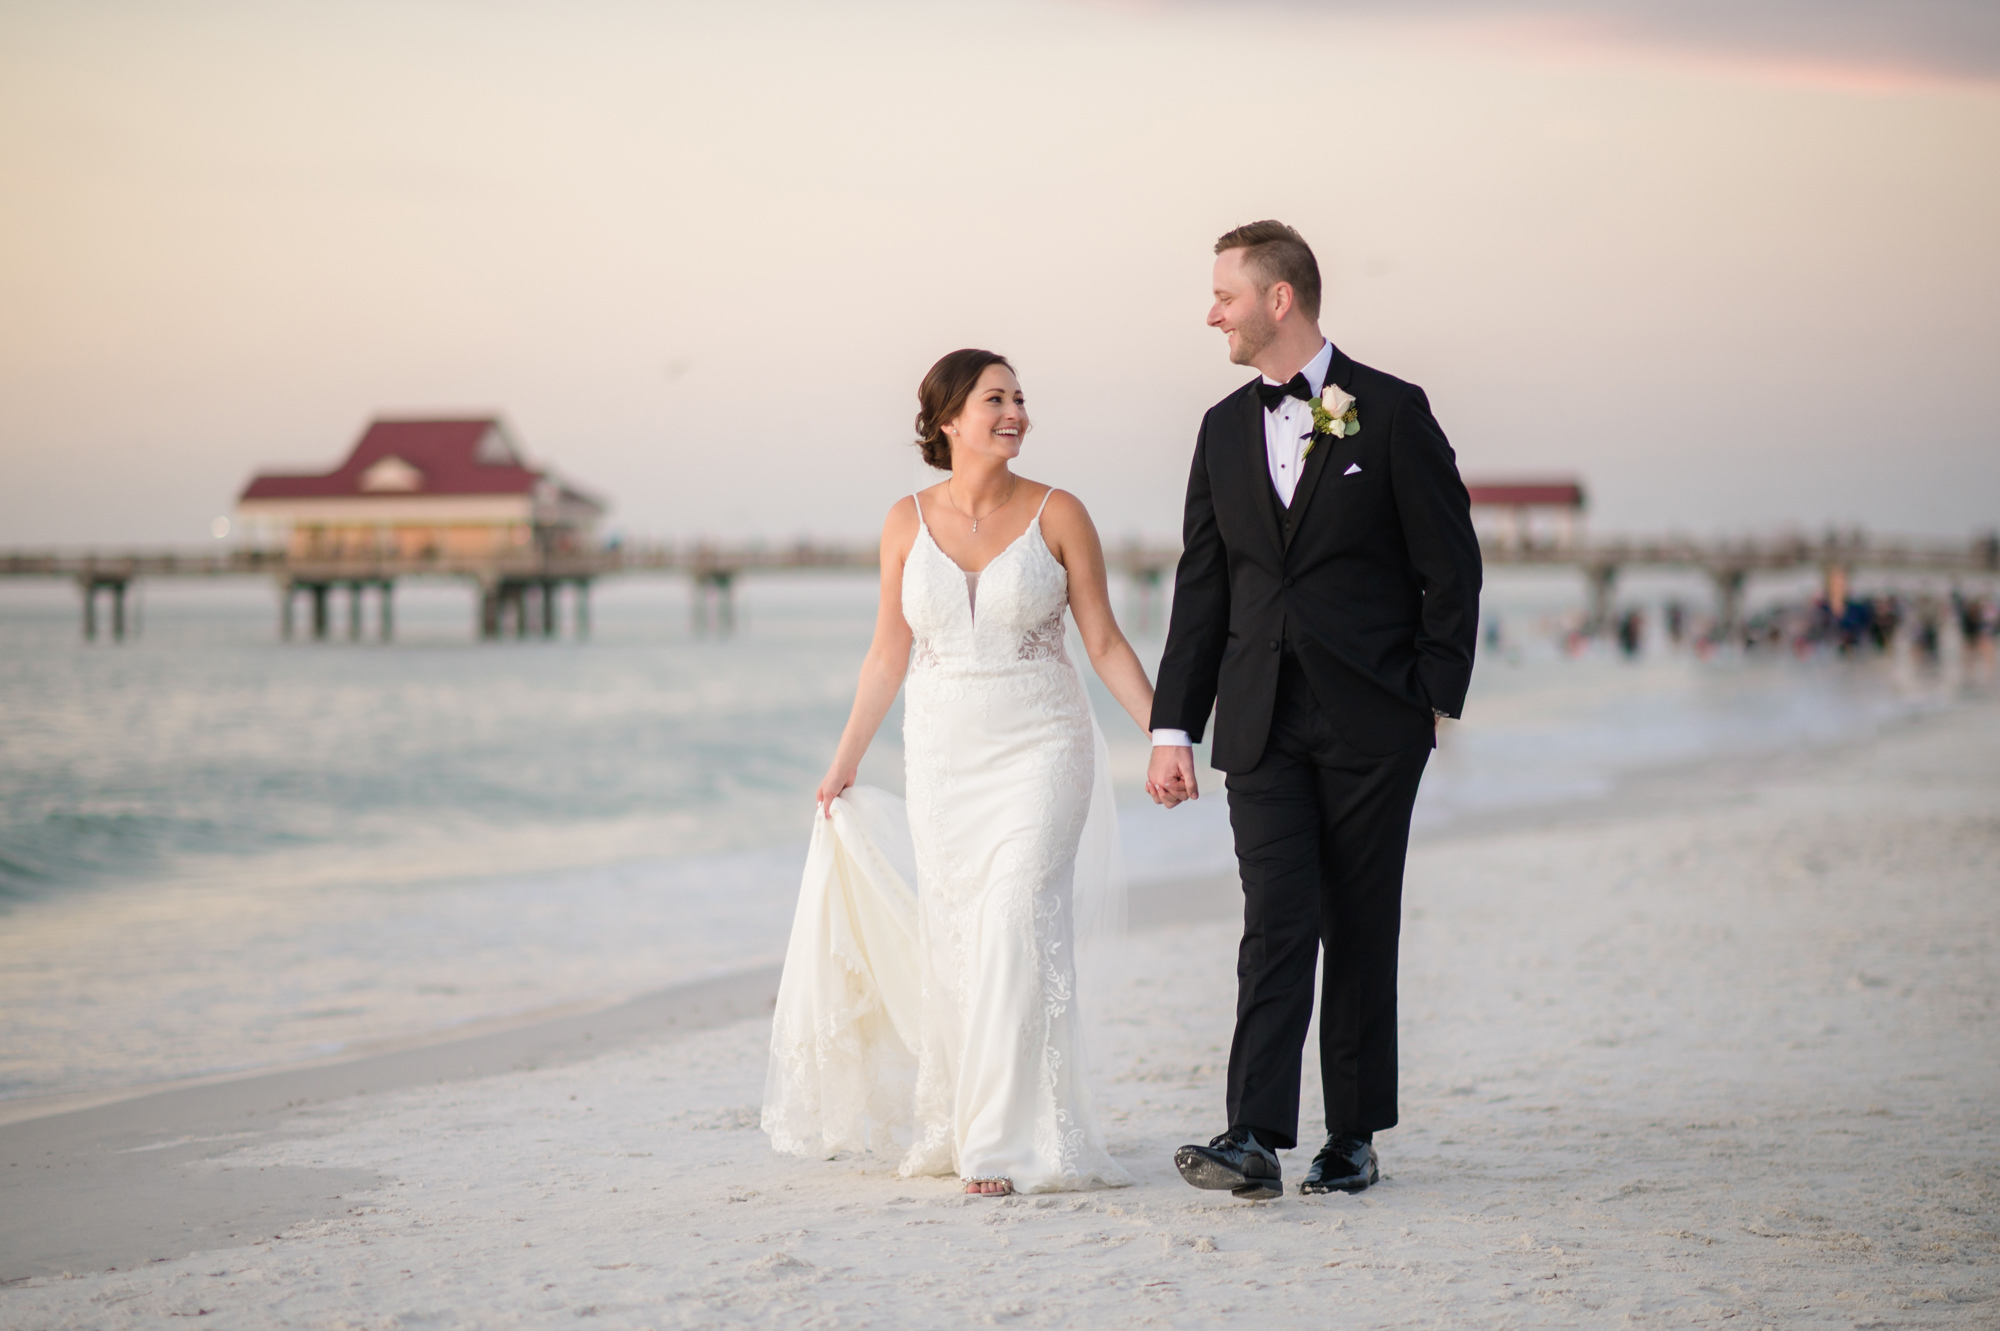 Intimate Bride and Groom Beach Wedding Portrait | Venue Wyndham Clearwater Beach